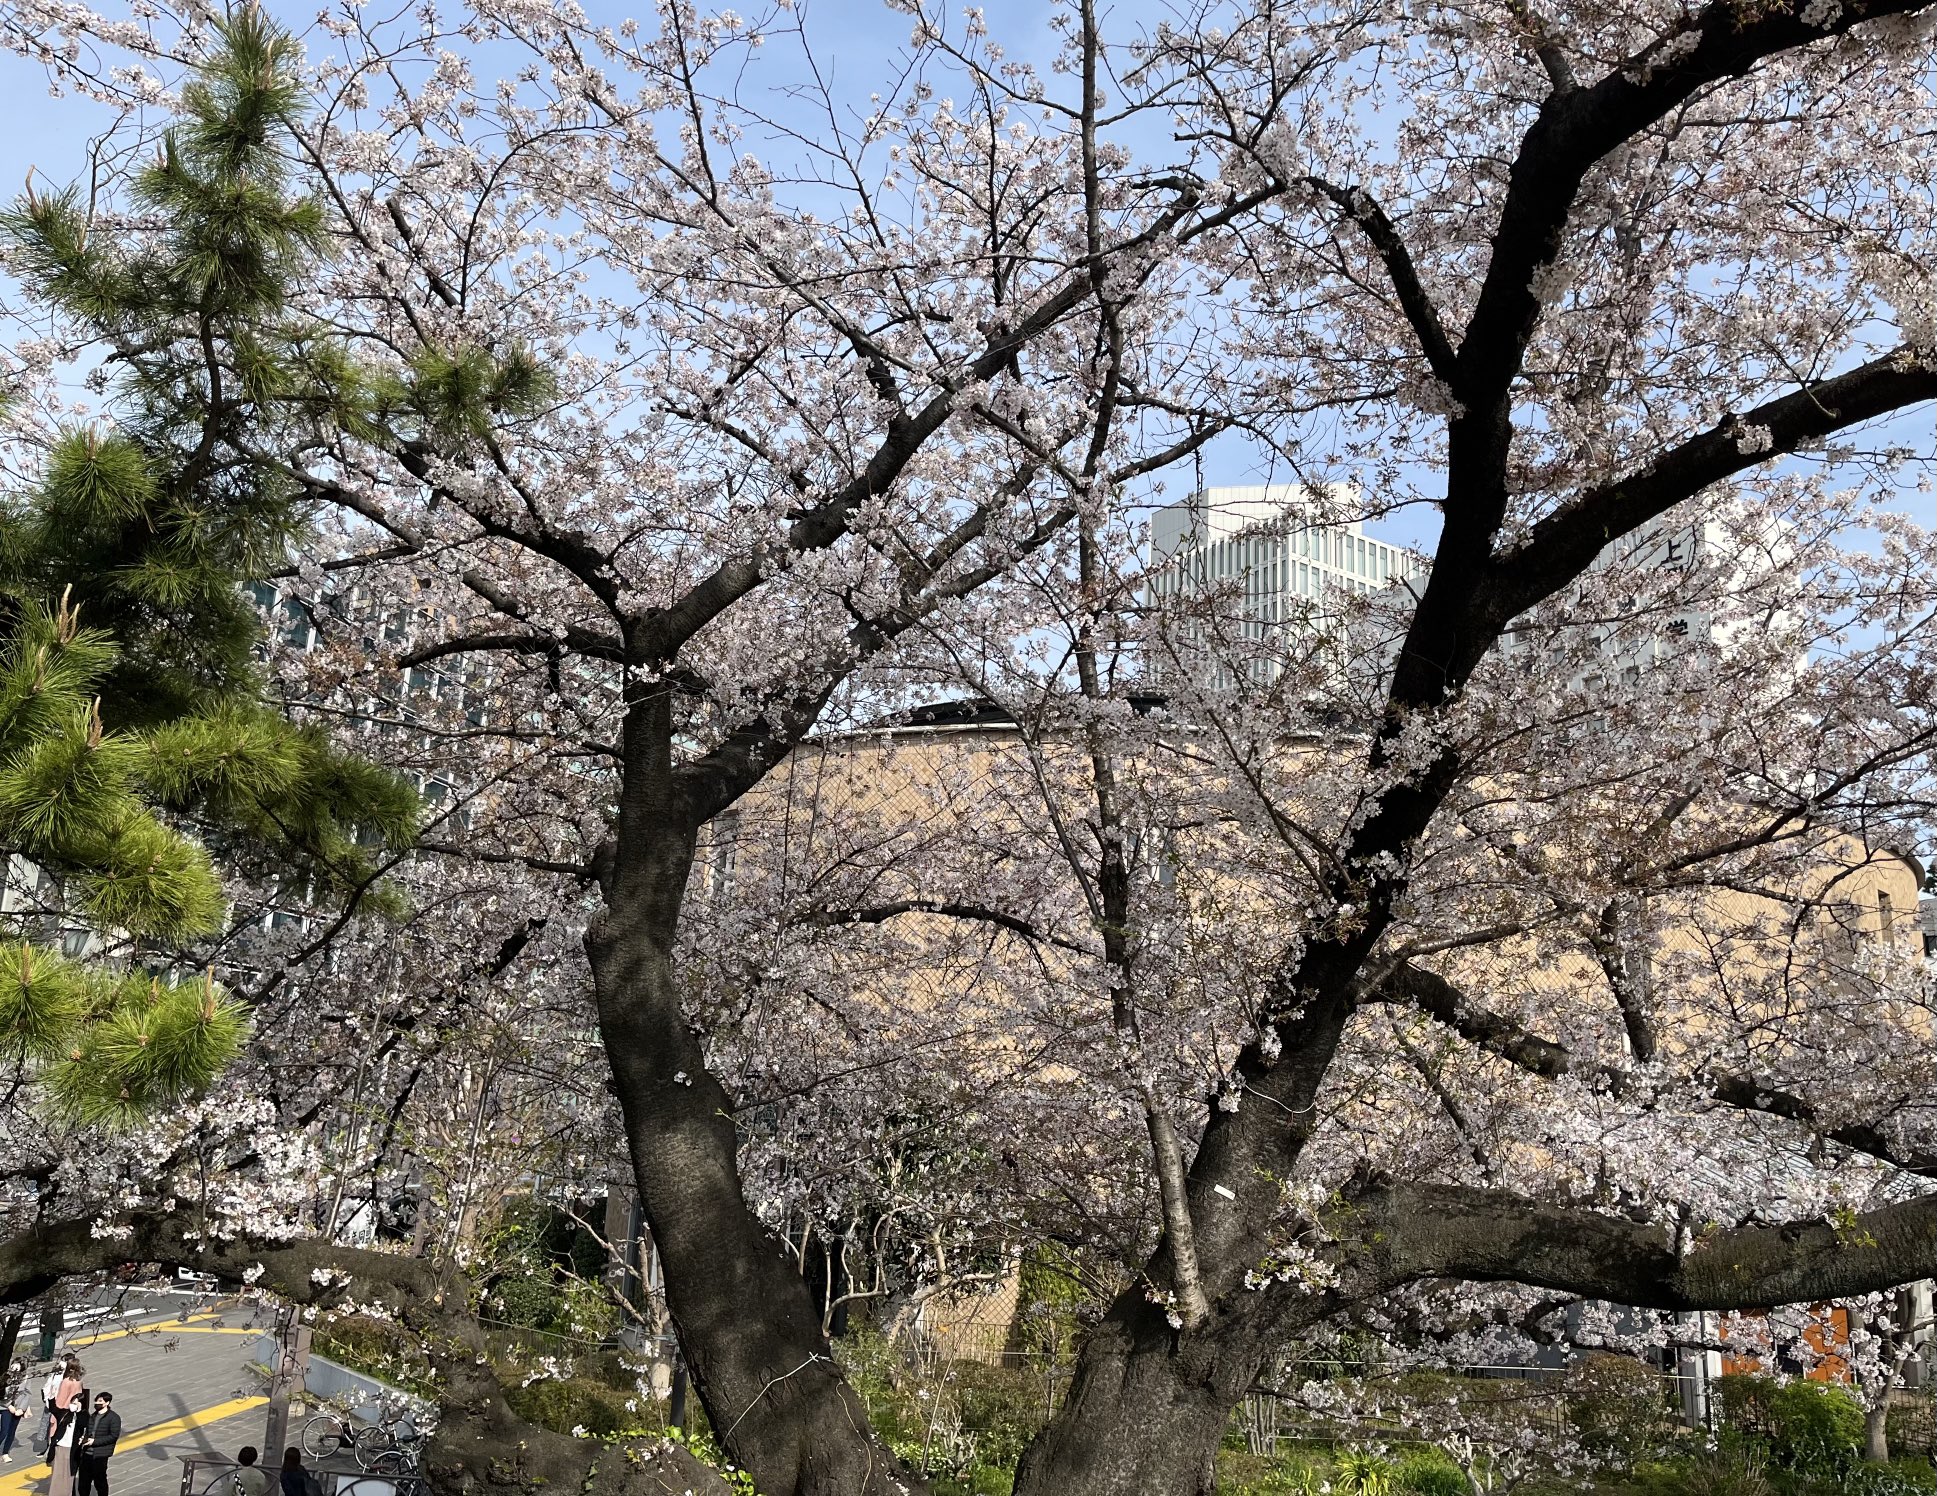 تويتر Mami على تويتر ランチのあとは四ツ谷の上智大の近くを桜を目でながら散策 綺麗な桜 に心がほっこりします T Co Qxxsbrixtt